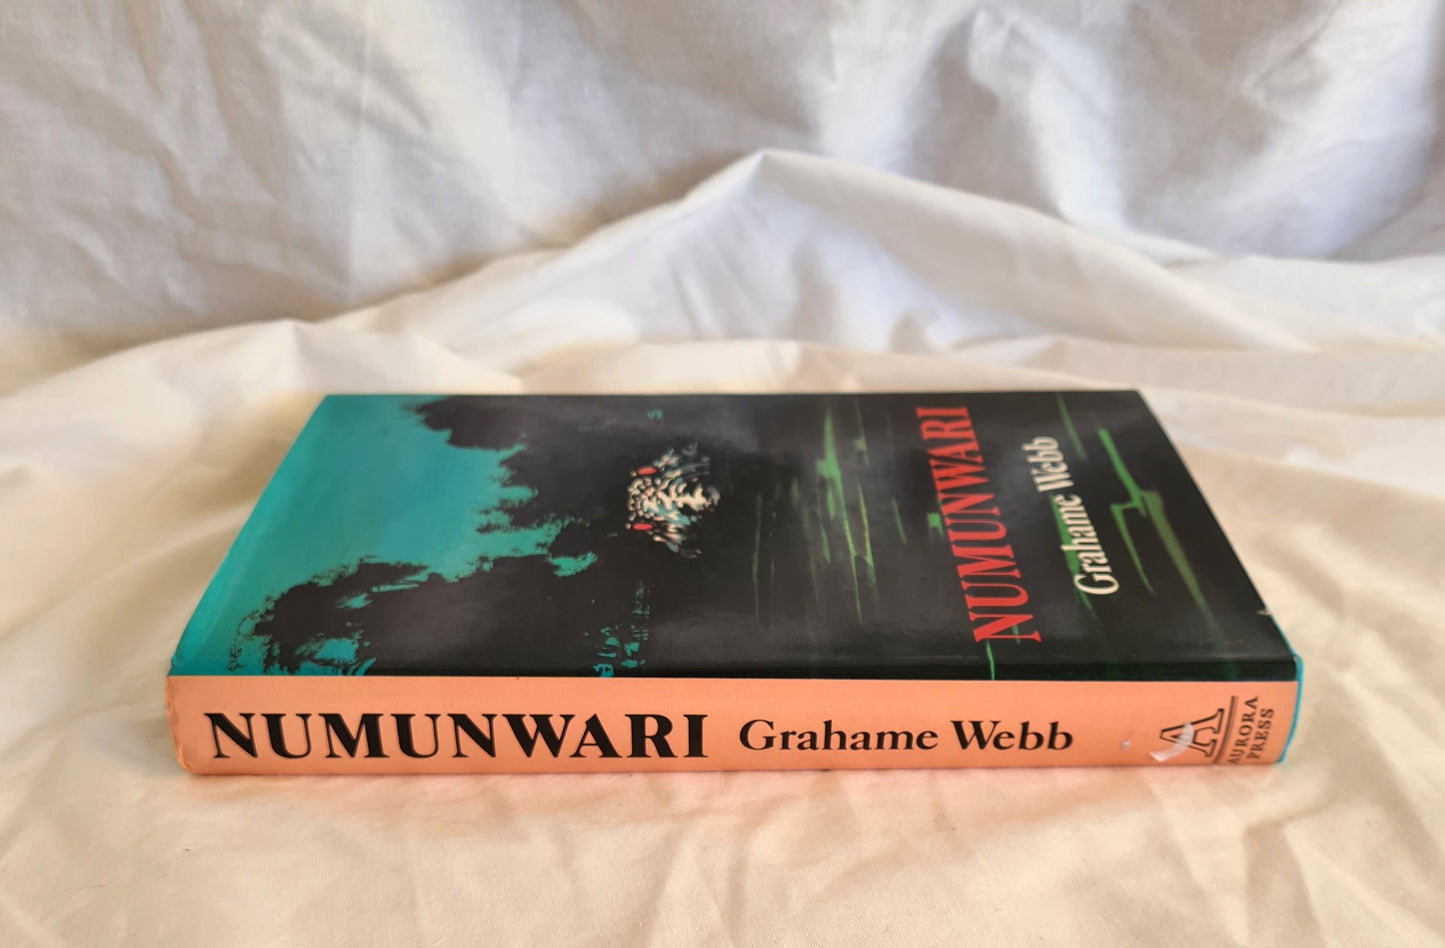 Numunwari by Grahame Webb